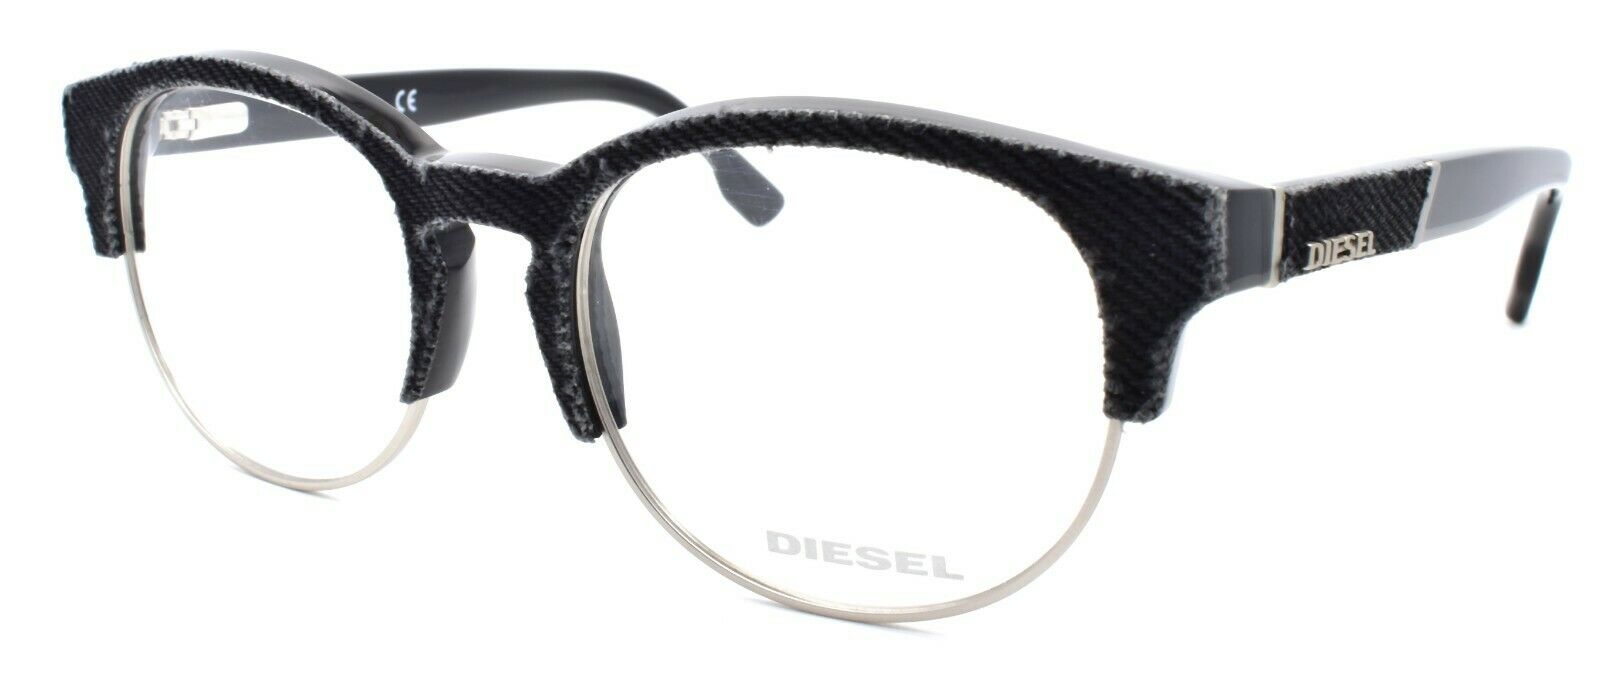 1-Diesel DL5138 005 Unisex Eyeglasses Frames 50-19-145 Black Grey Denim-664689668885-IKSpecs